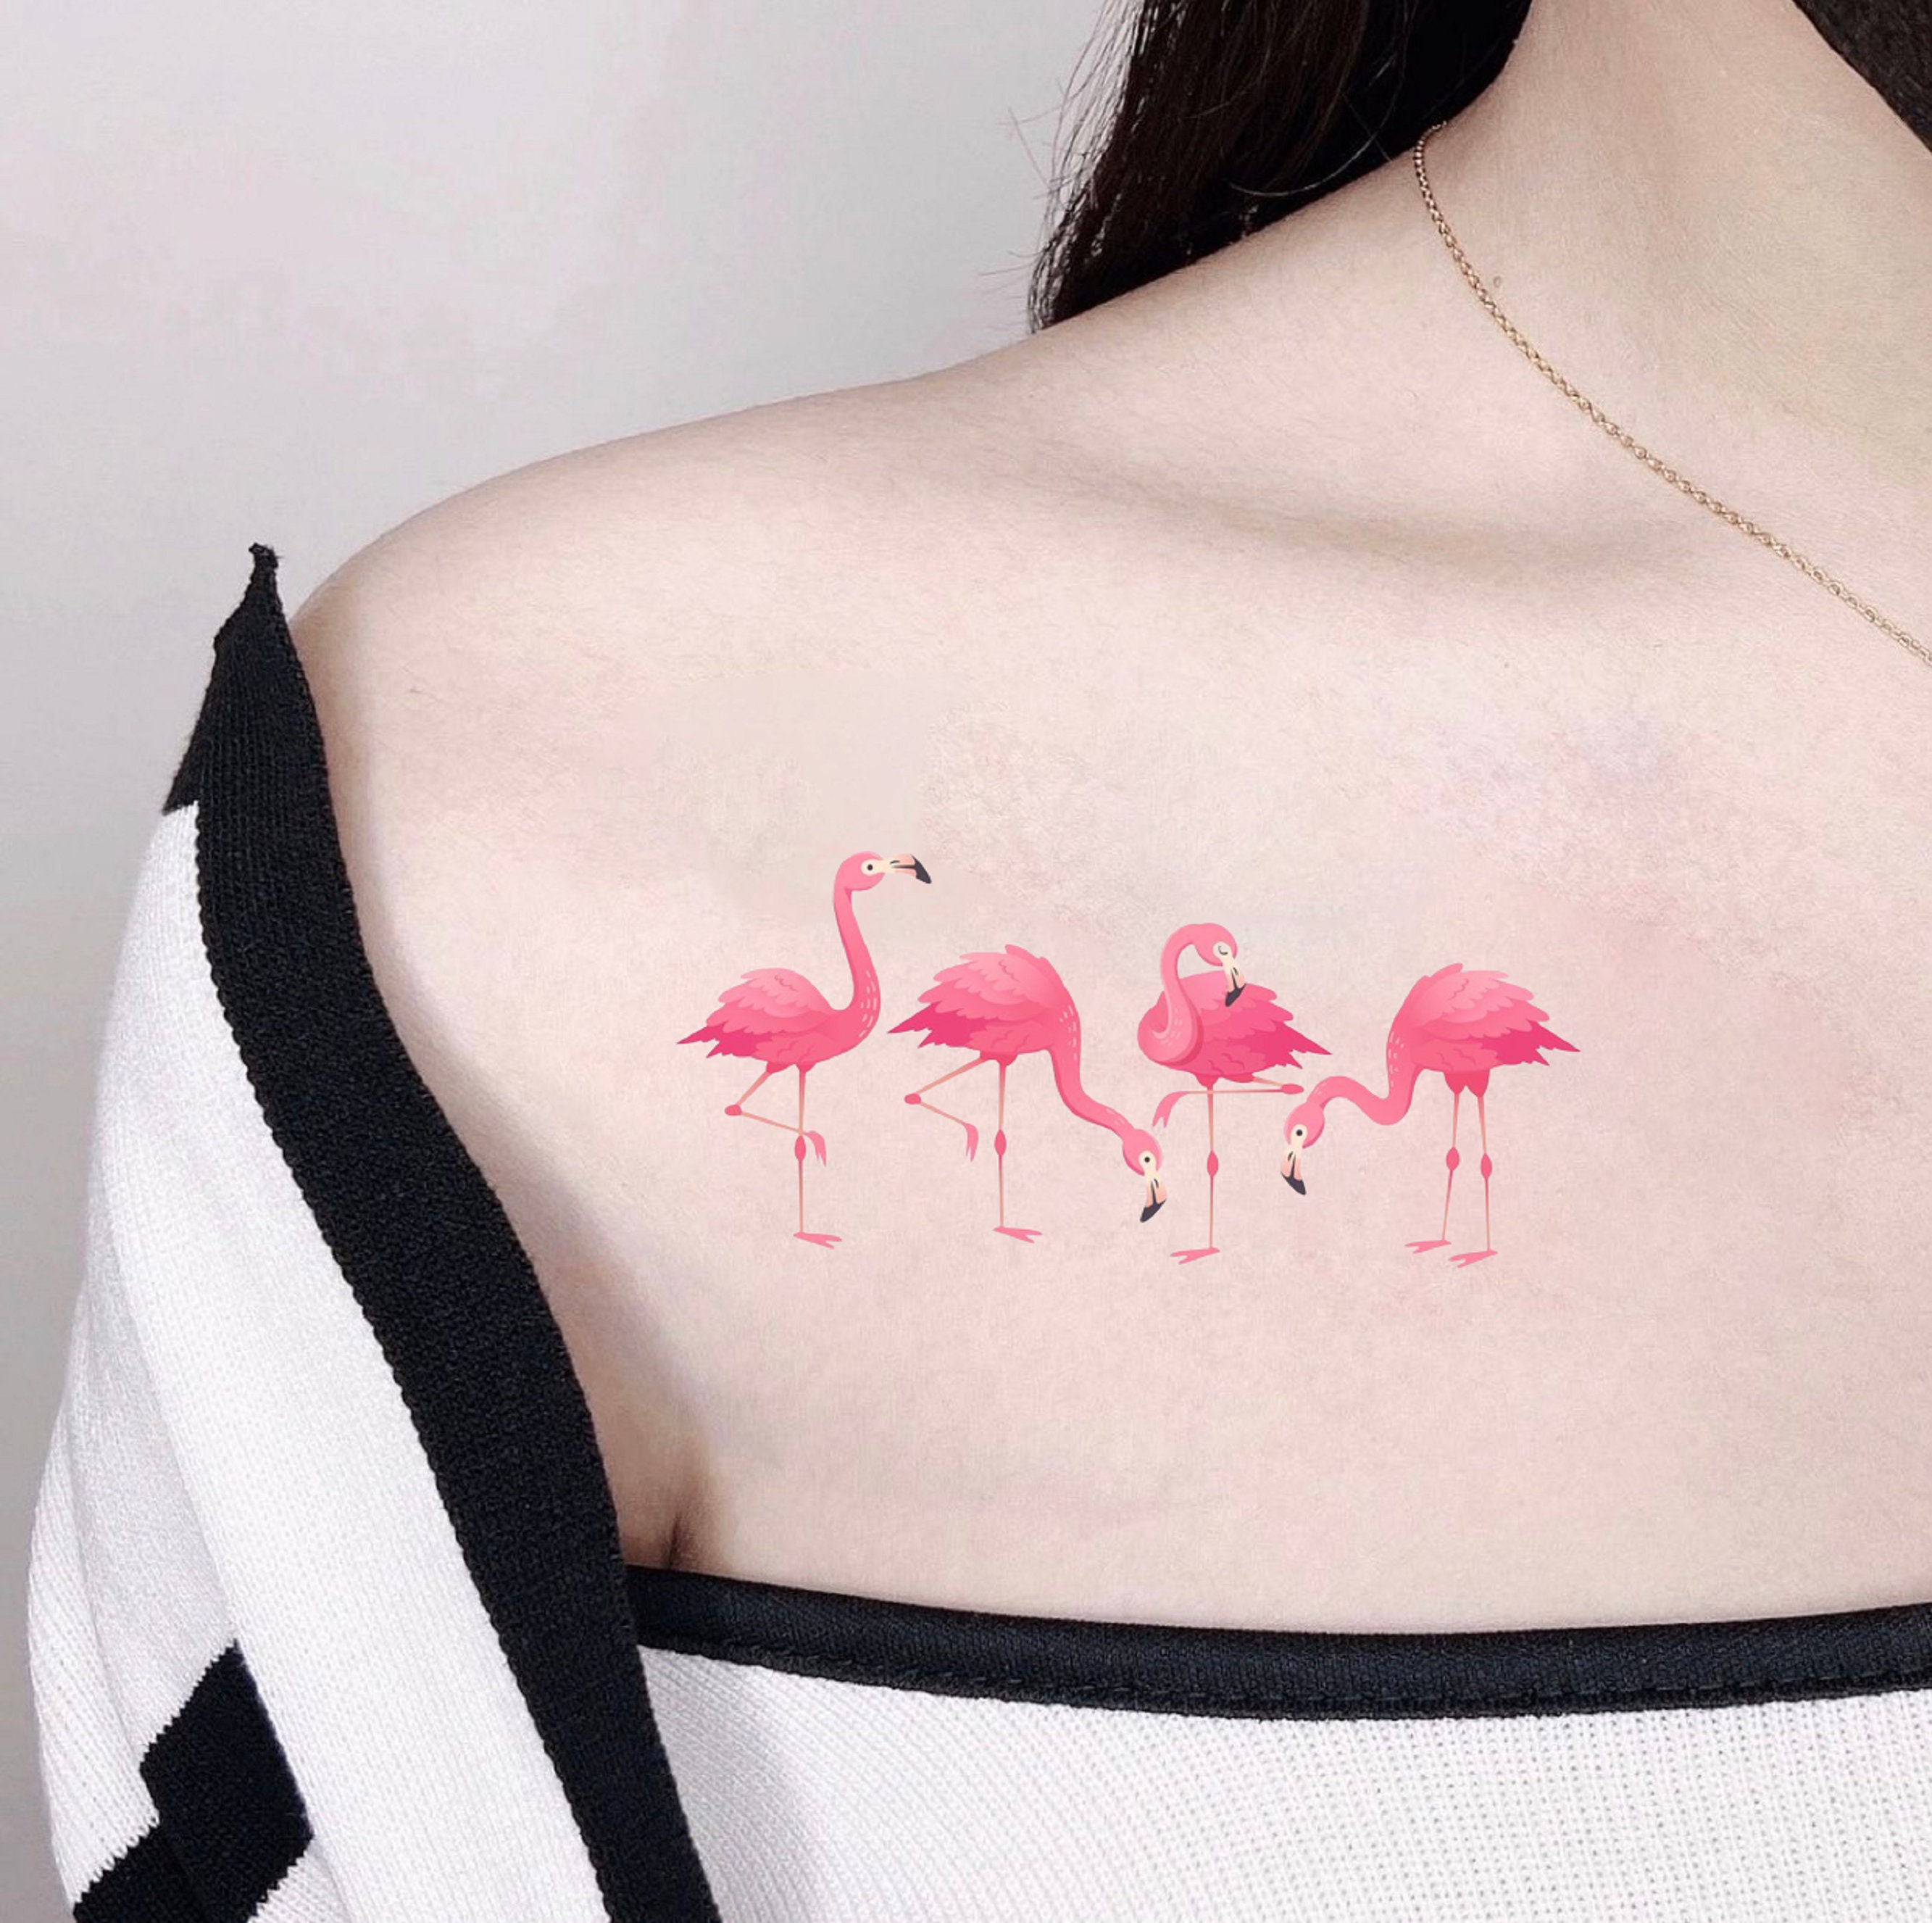 Fancy Flamingo Tattoo Ideas For Women - Tattoos Designs for Girls - YouTube